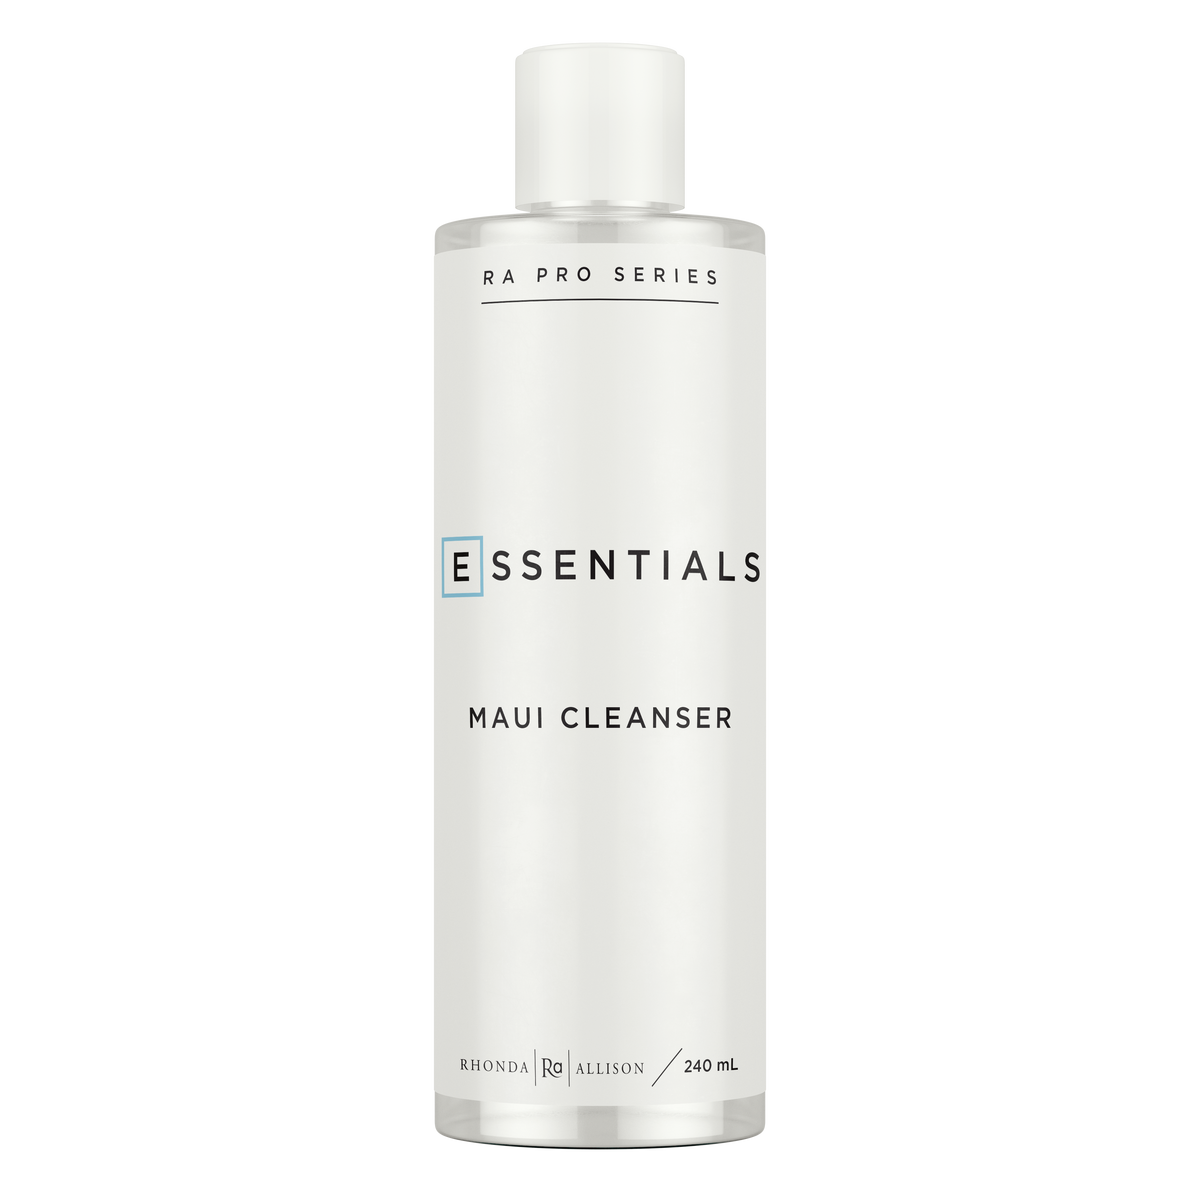 Maui Cleanser with Lactic Acid (Original Formulation)